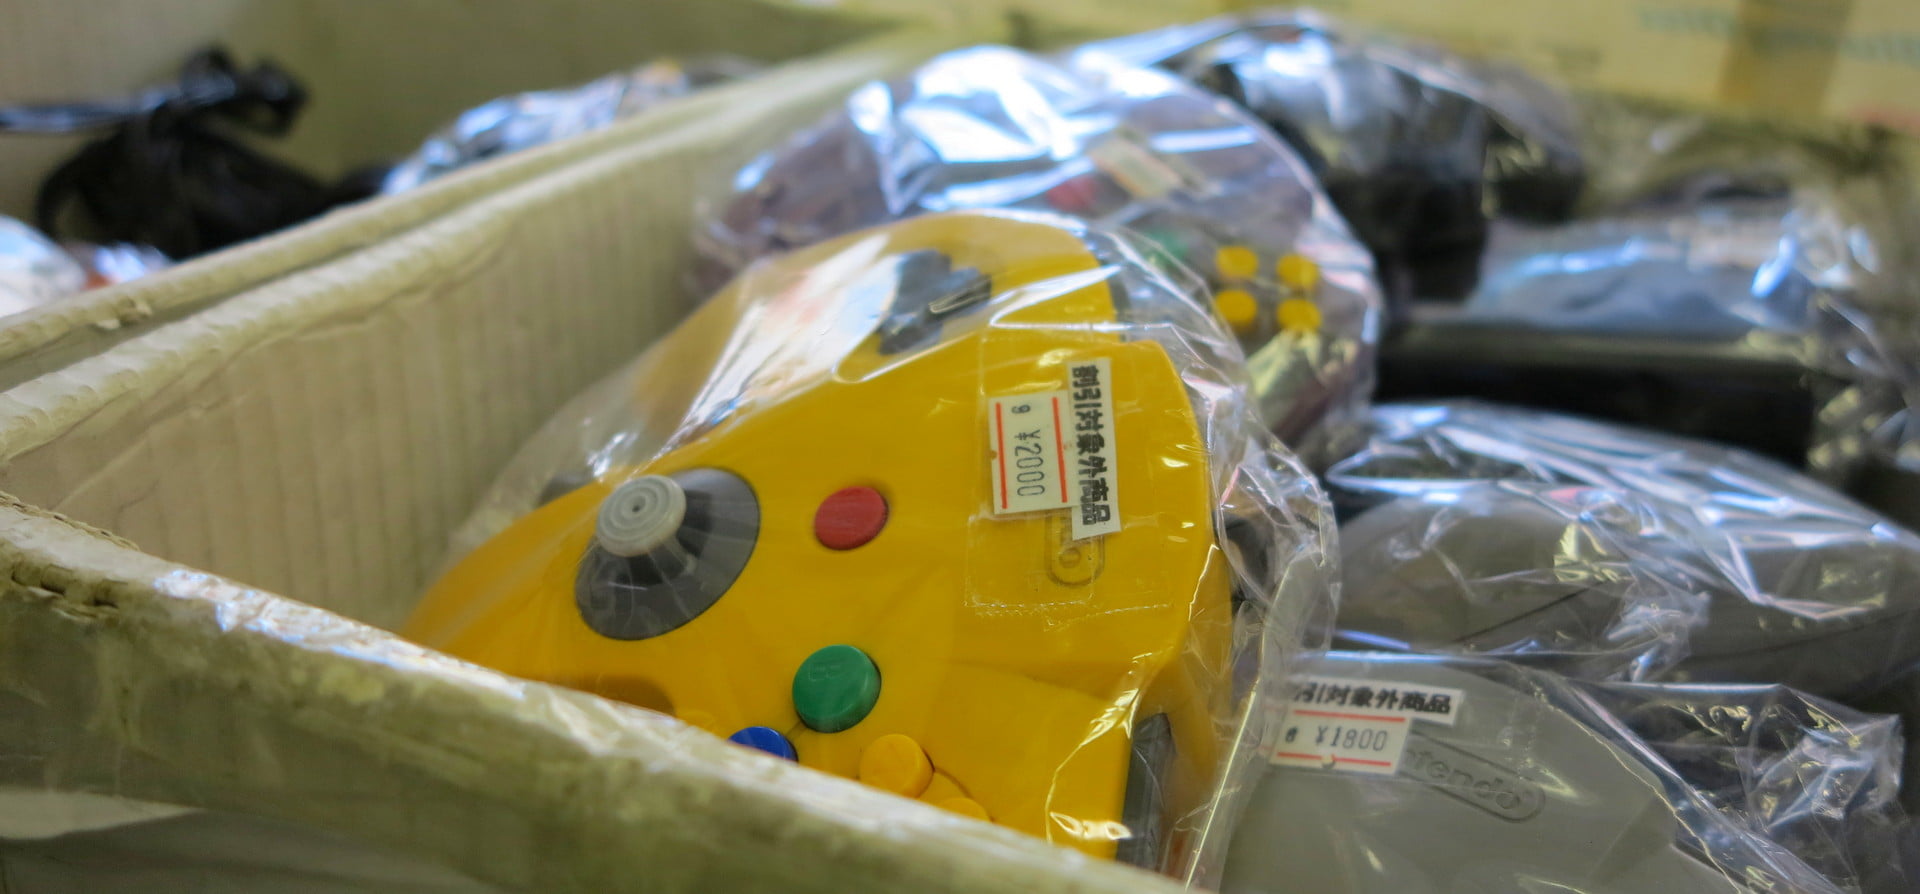 Box of Nintendo 64 controllers.